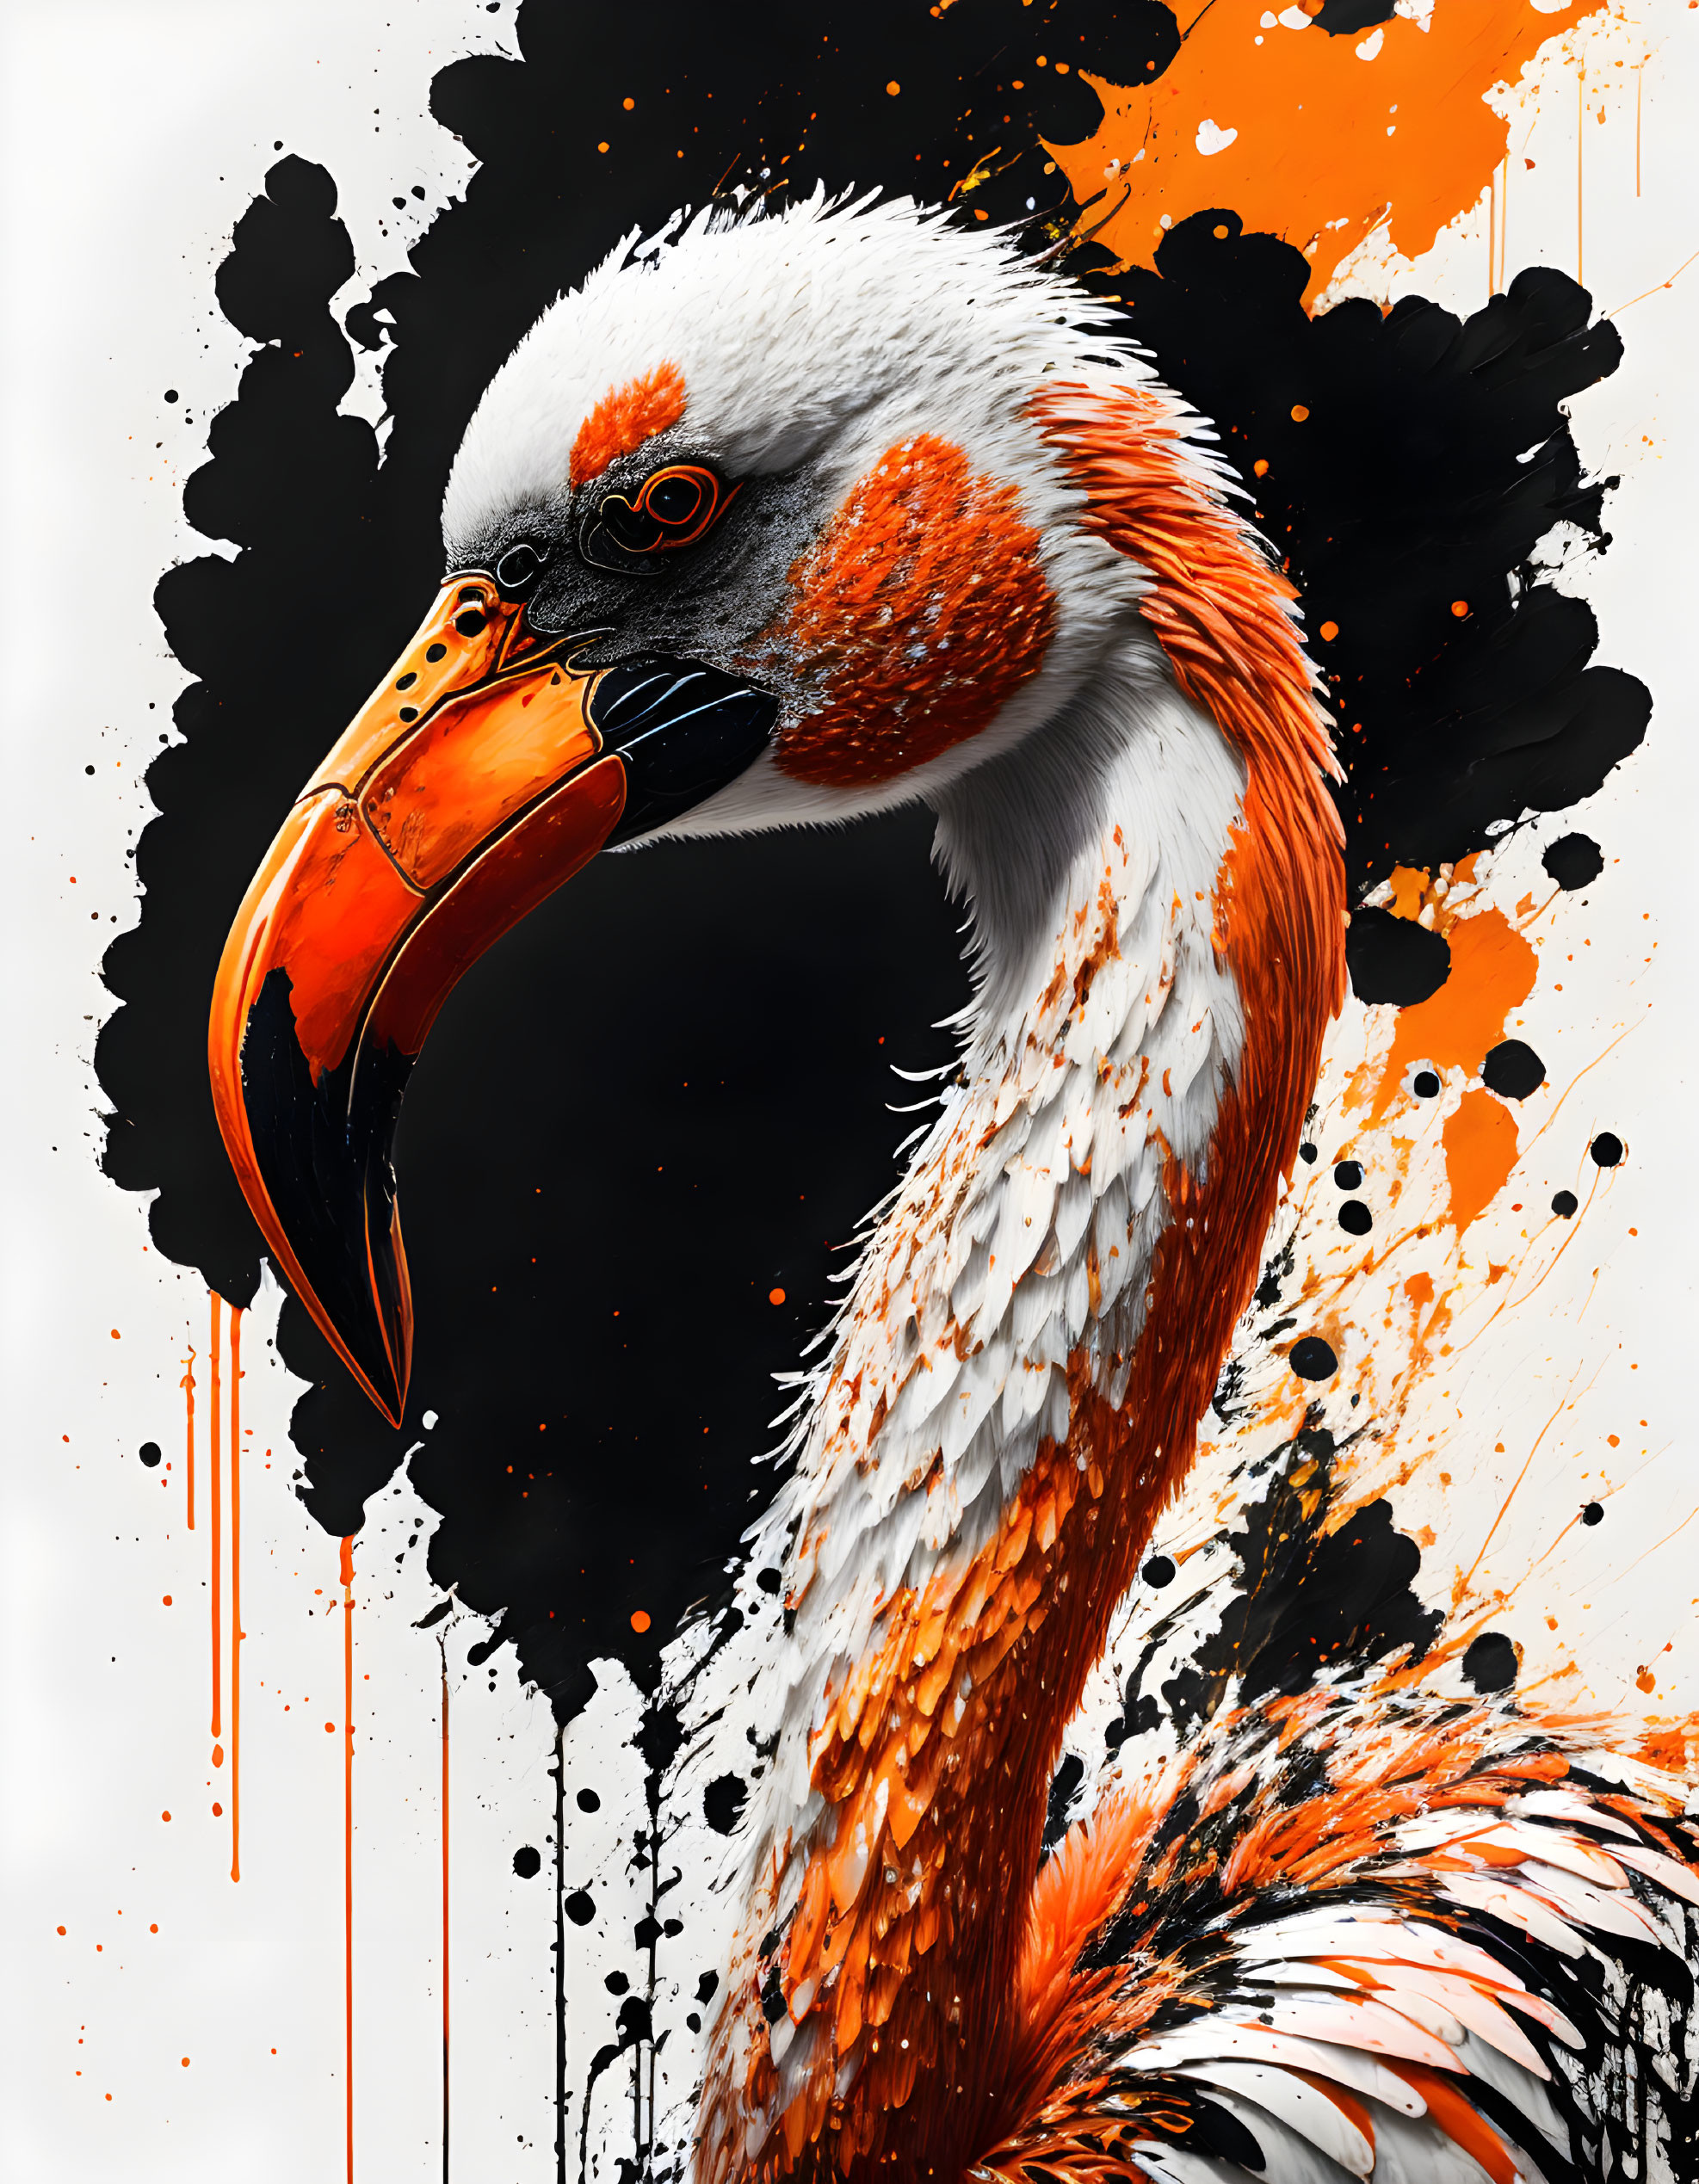 Detailed Stylized Crane Artwork: Vibrant Orange & Black Palette, Dynamic Ink Splatter